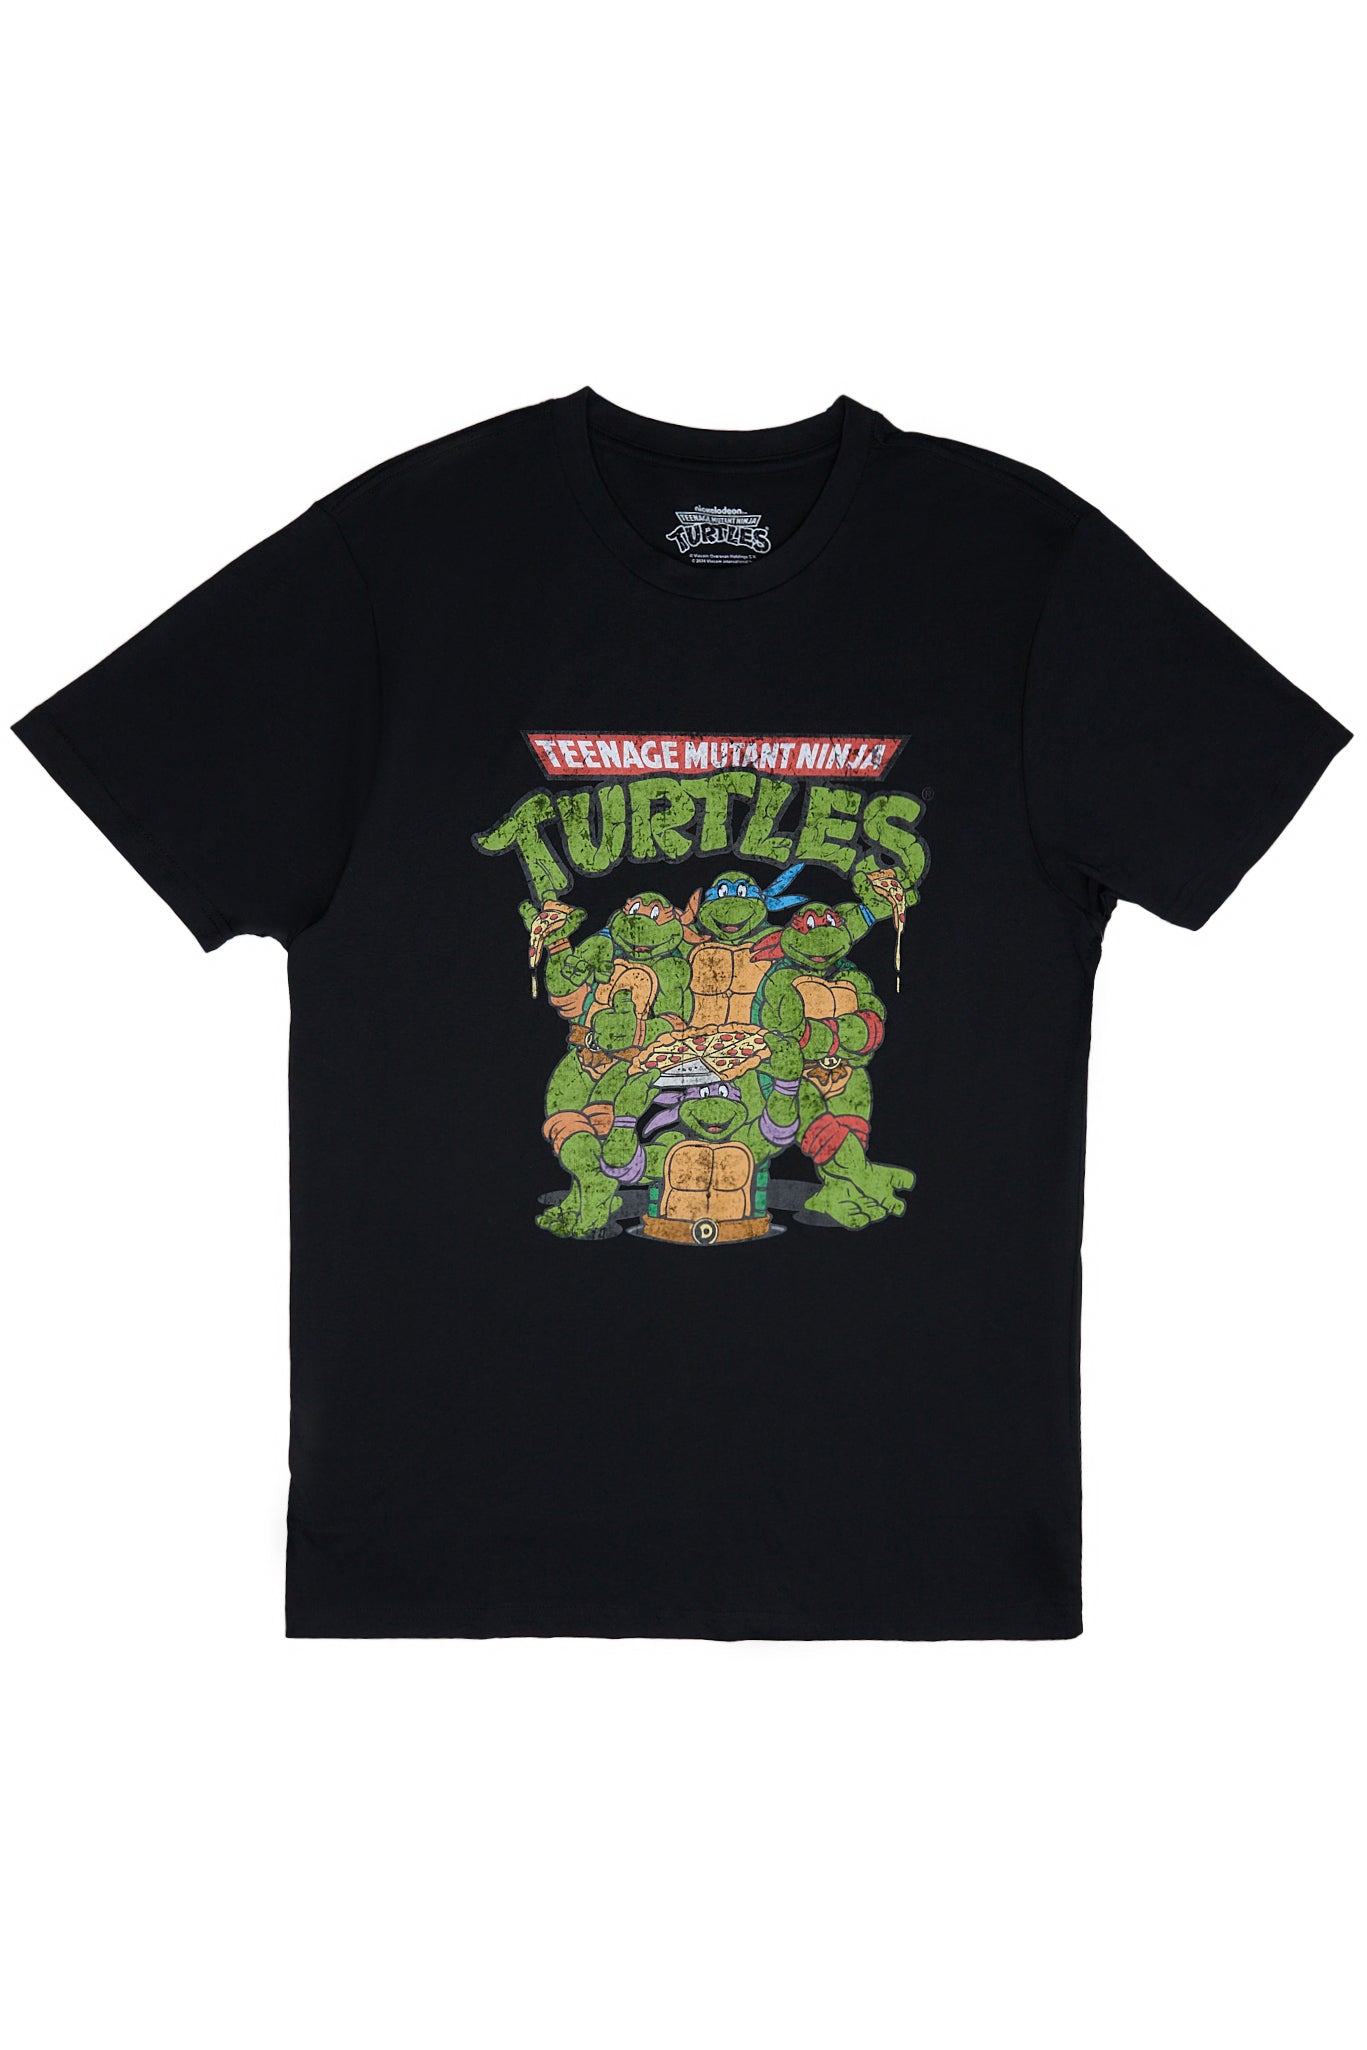 Teenage Mutant Ninja Turtles Pizza Party Graphic Tee